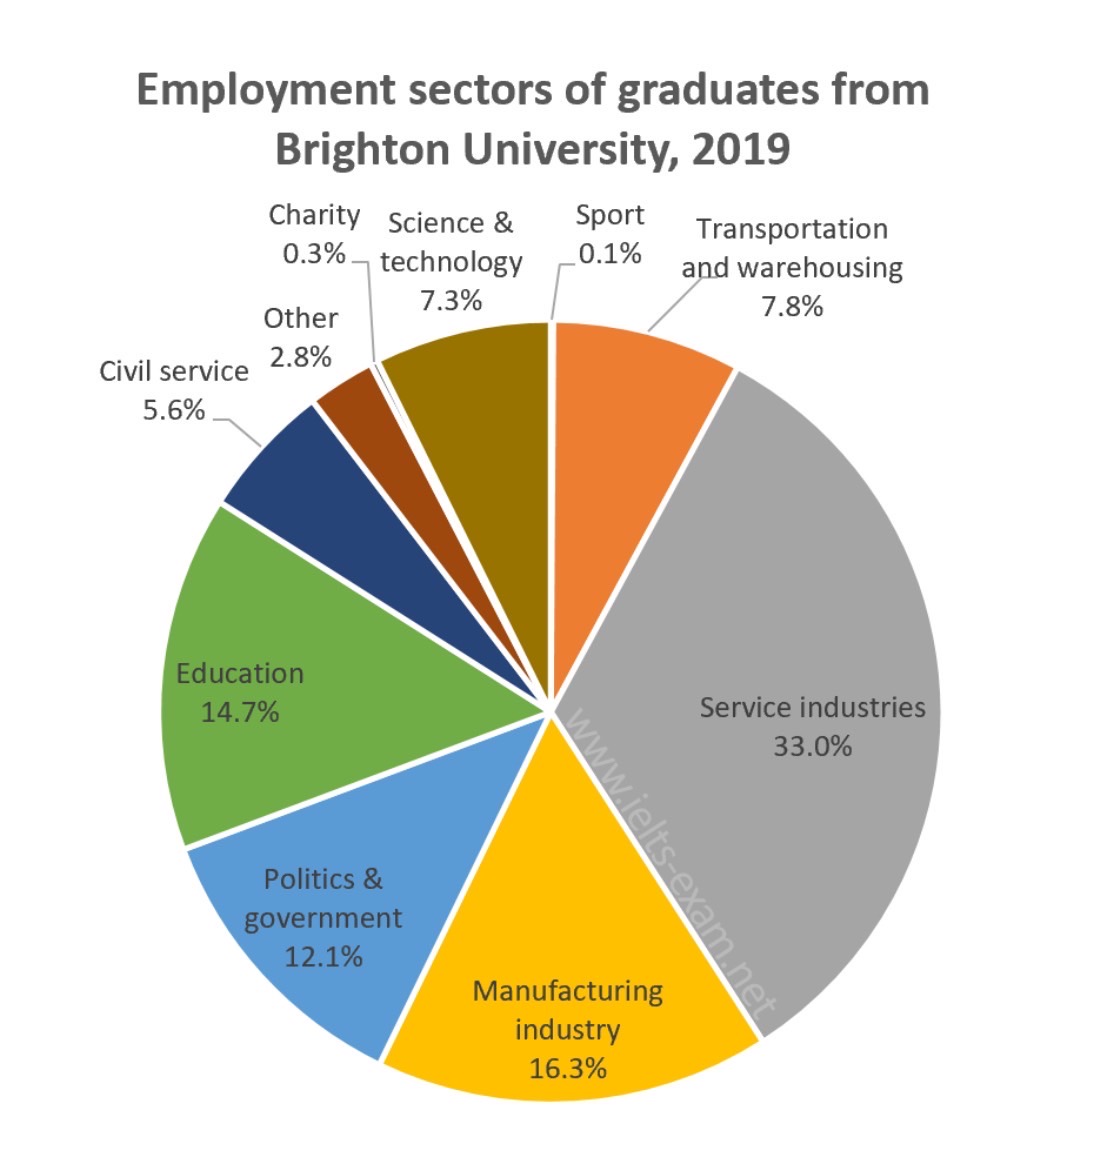 Employment of graduates from brighton university in 2019.